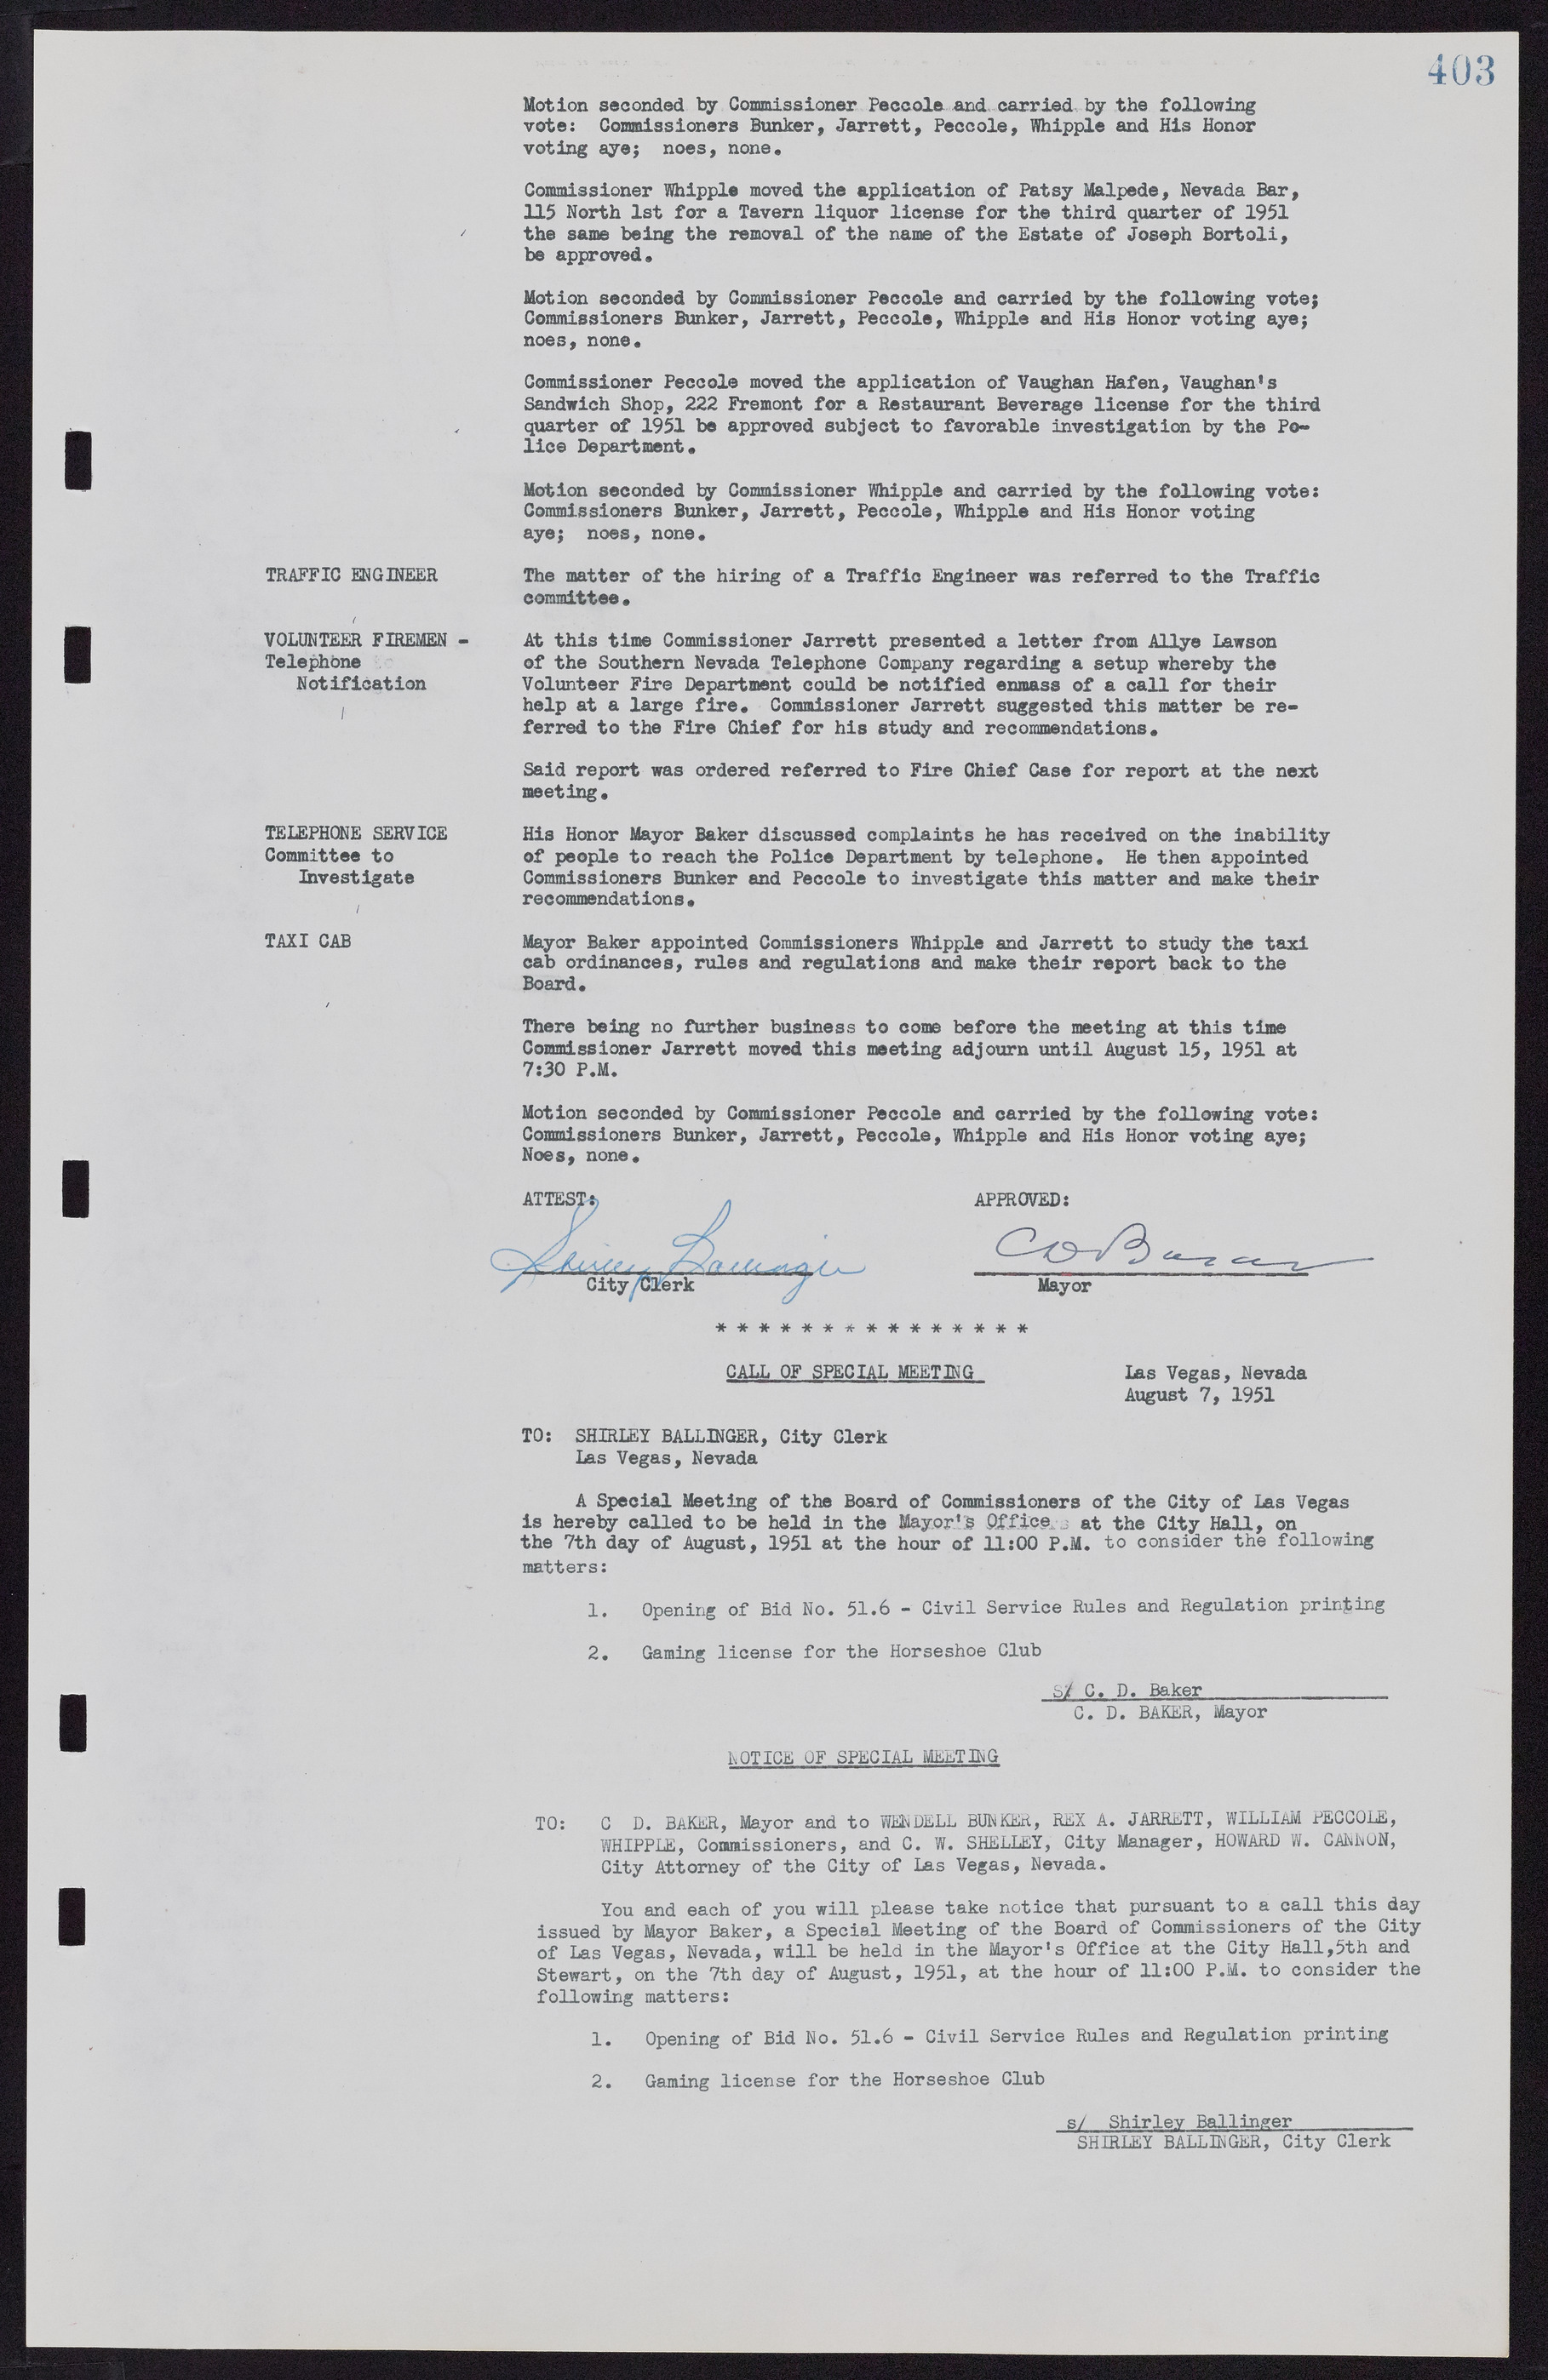 Las Vegas City Commission Minutes, November 7, 1949 to May 21, 1952, lvc000007-419